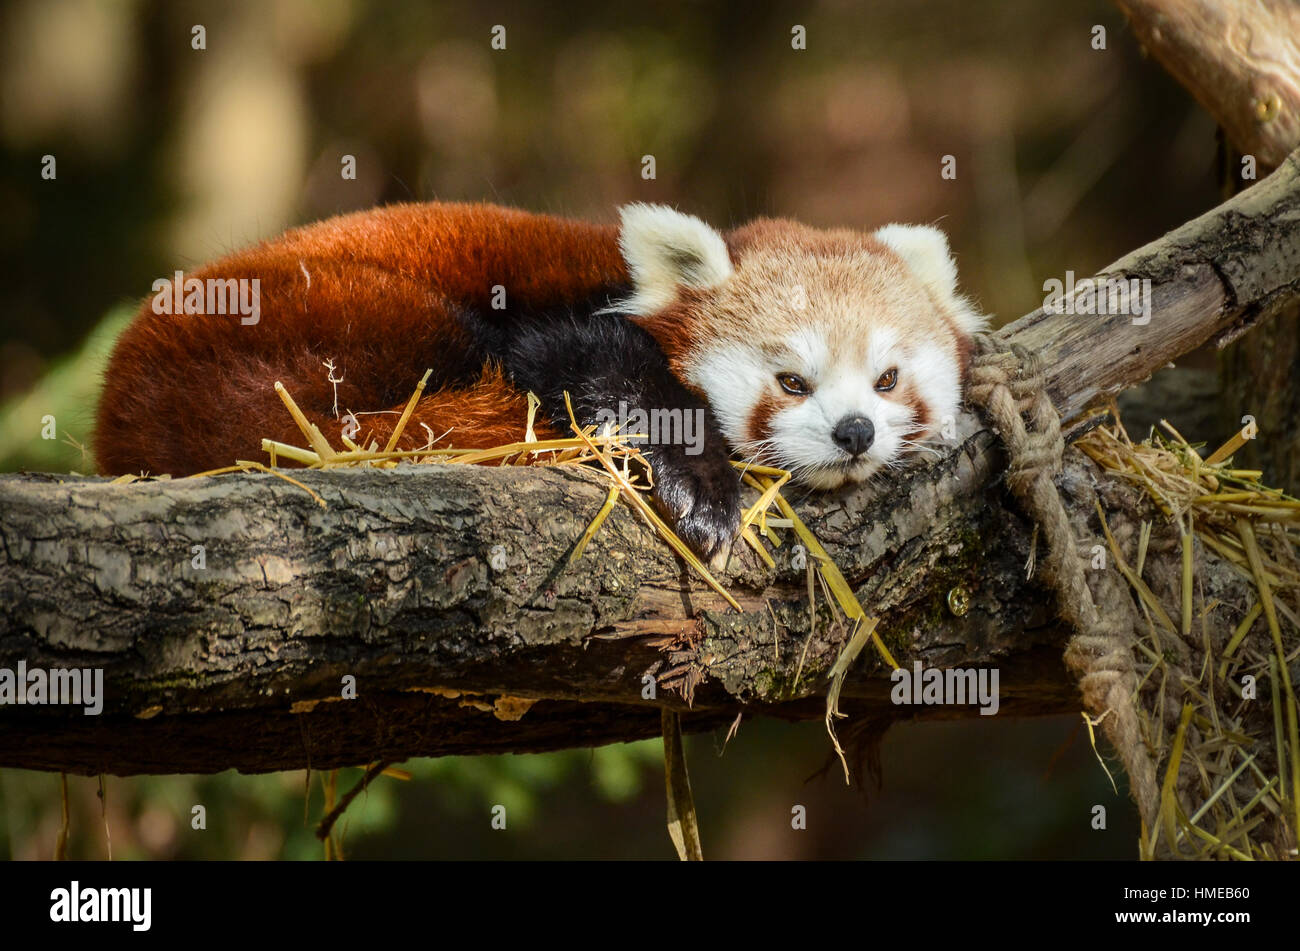 Panda rosso dormire in un nido Foto stock - Alamy